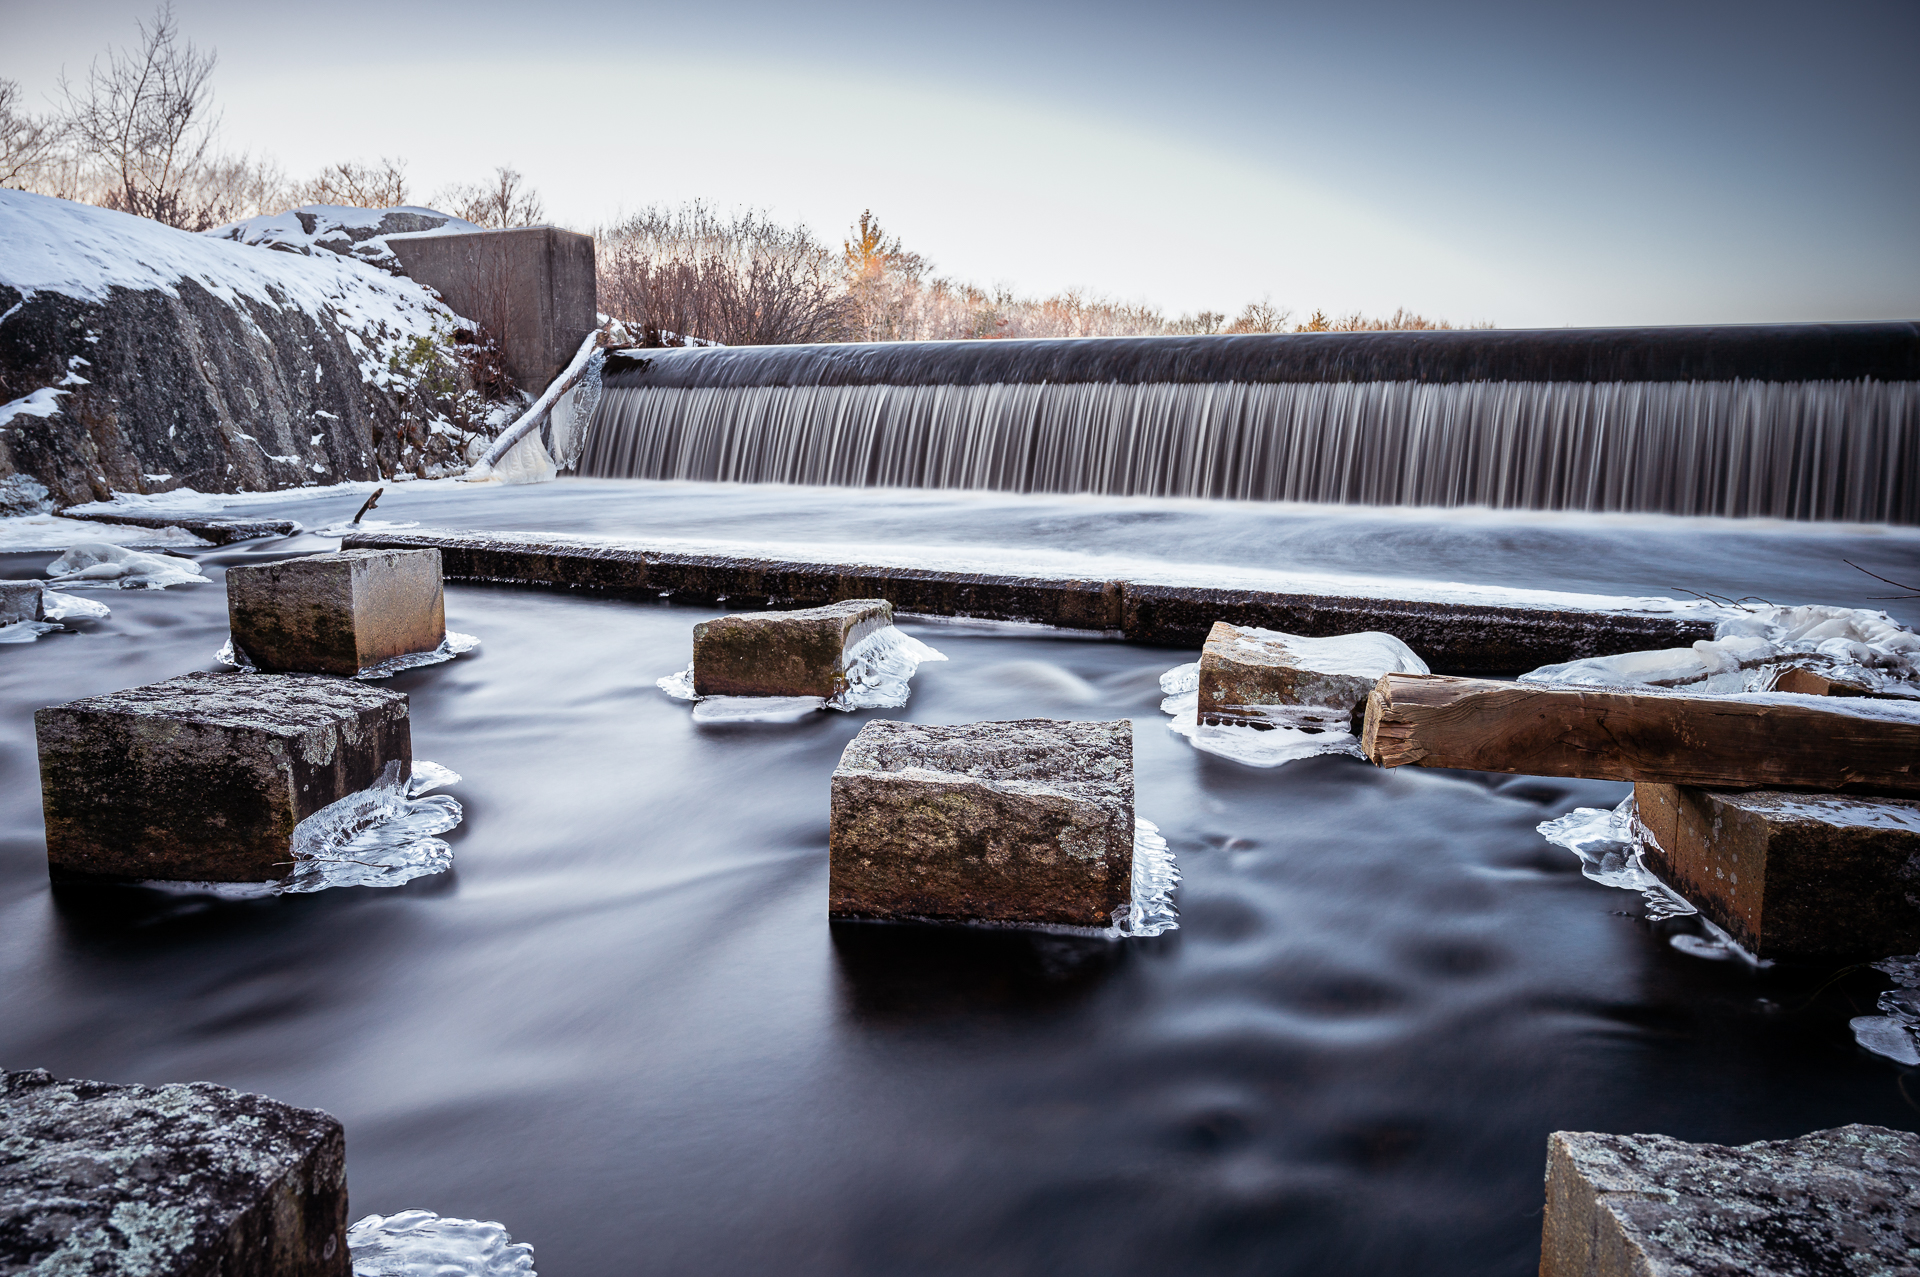 Concrete blocks resembling ice blocks at Cleveland Pond.